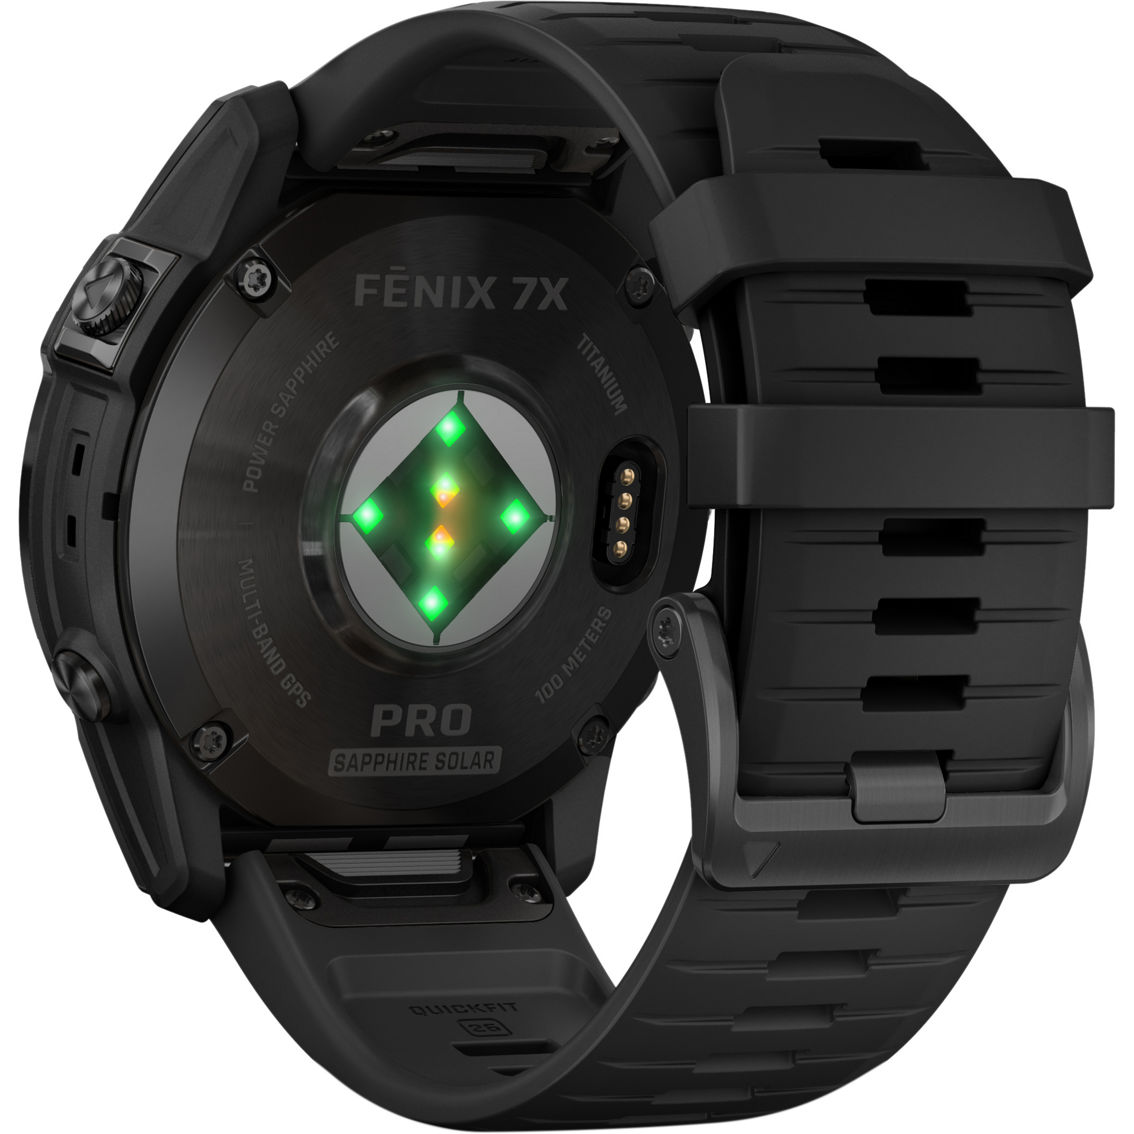 Garmin Fenix 7x Pro Sapphire Solar Edition Smart Watch 010-02778-10, Fitness & Gps Watches, Electronics